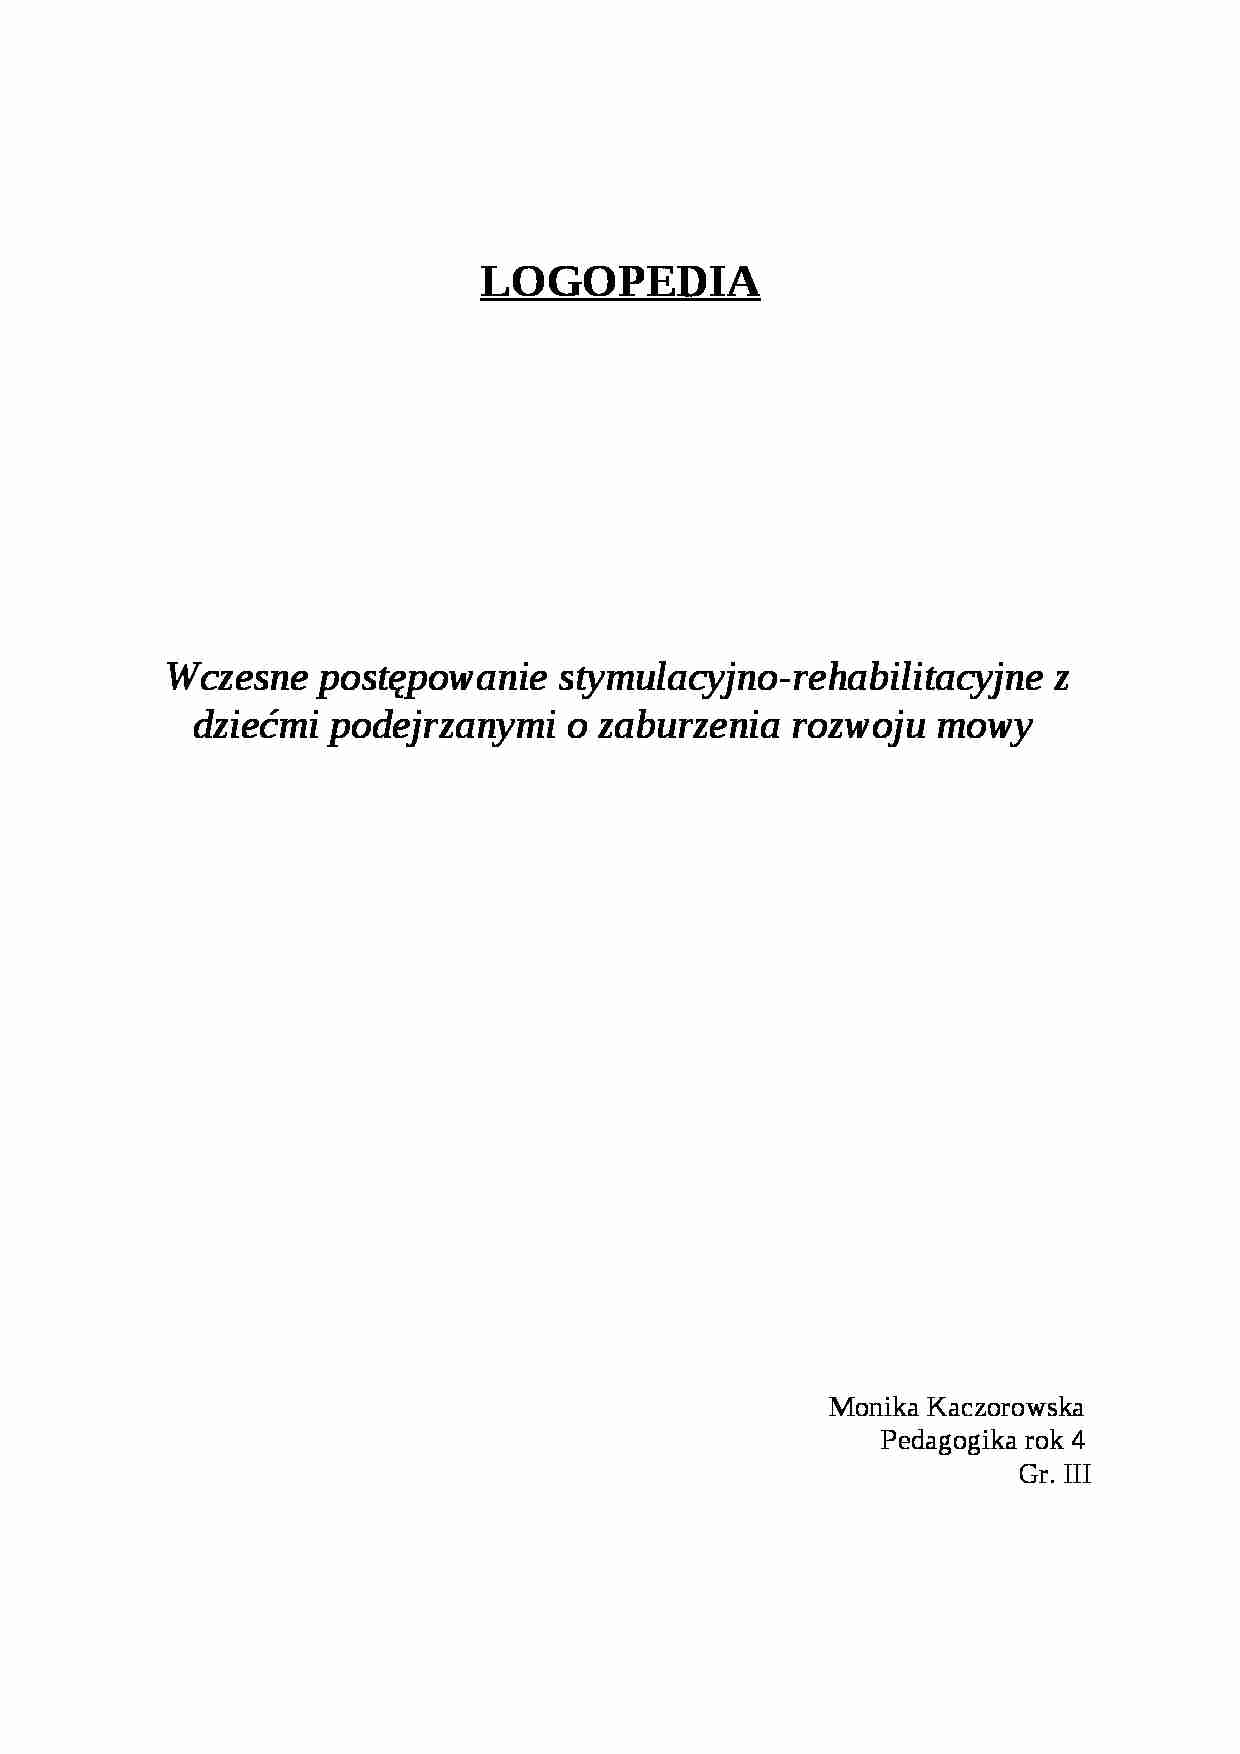 LOGOPEDIA- pedagogika - strona 1